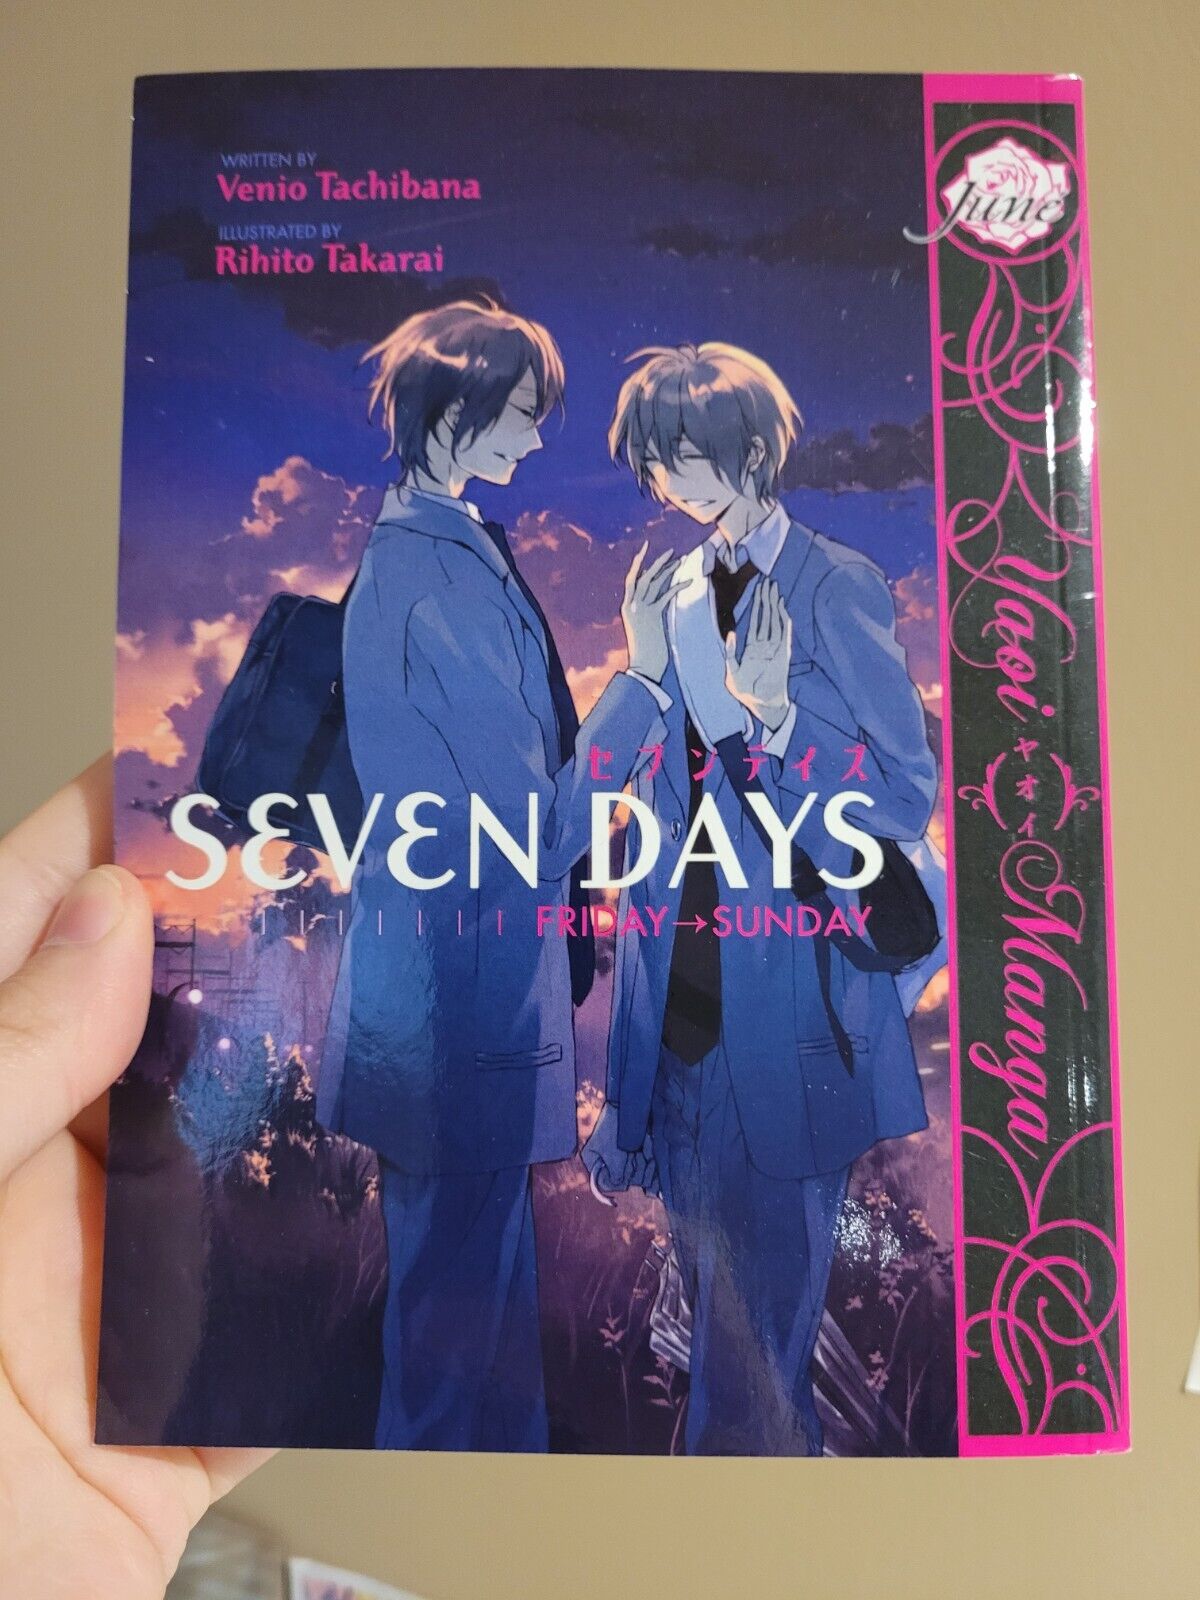 manga yaoi / Boys Love - Seven Days Complete set (2 books) by Rihito  Takarai | eBay